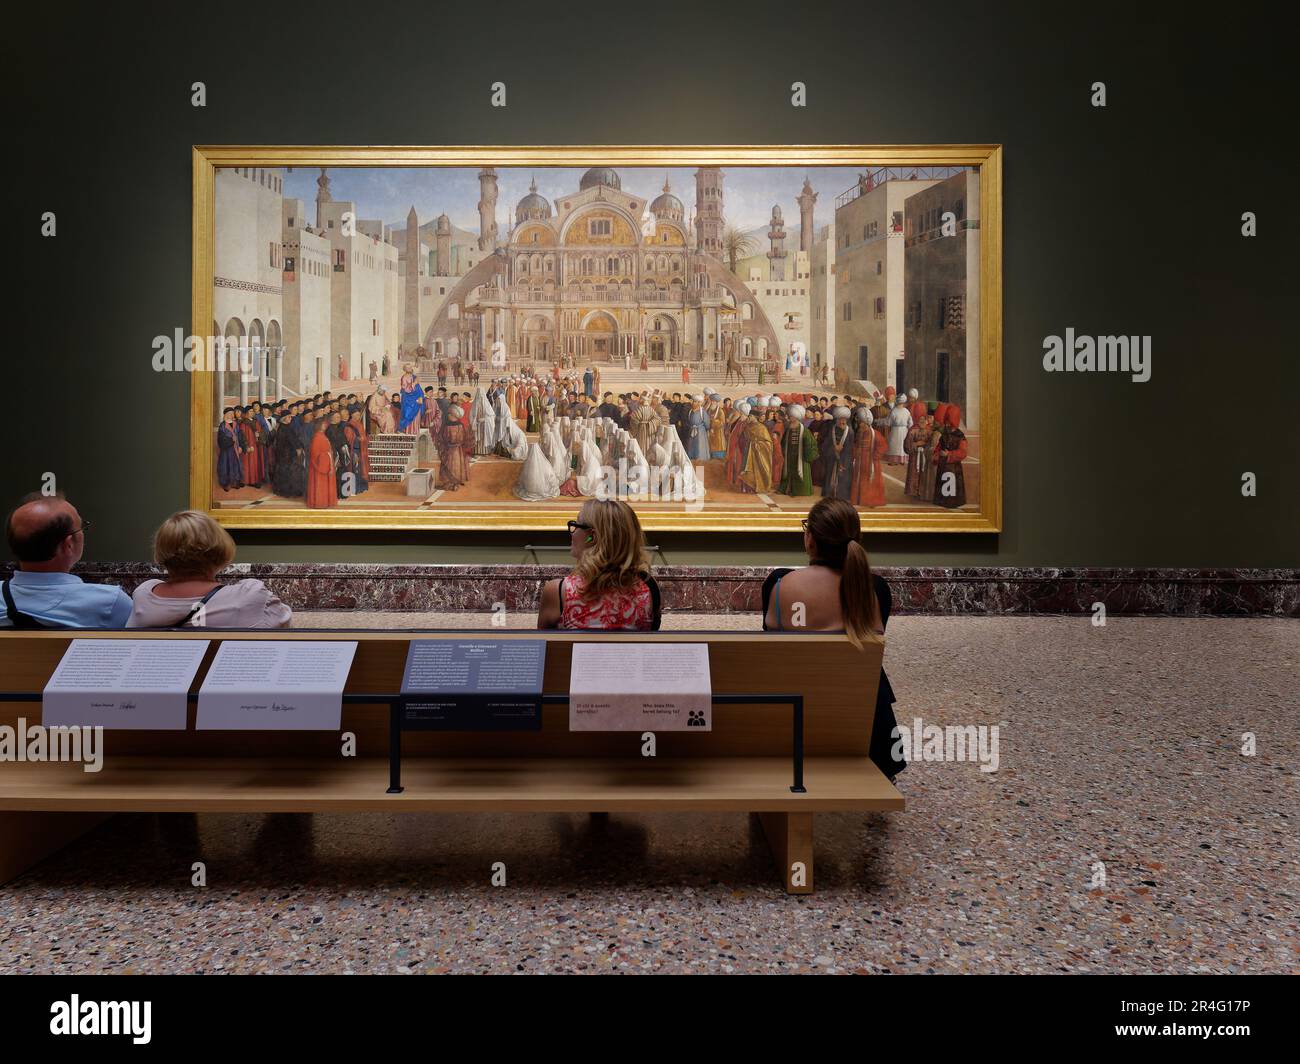 Interior of Pinacoteca di Brera (Art Gallery of Brera), district of Brera, City of Milan, Lombardy Region, Italy Stock Photo